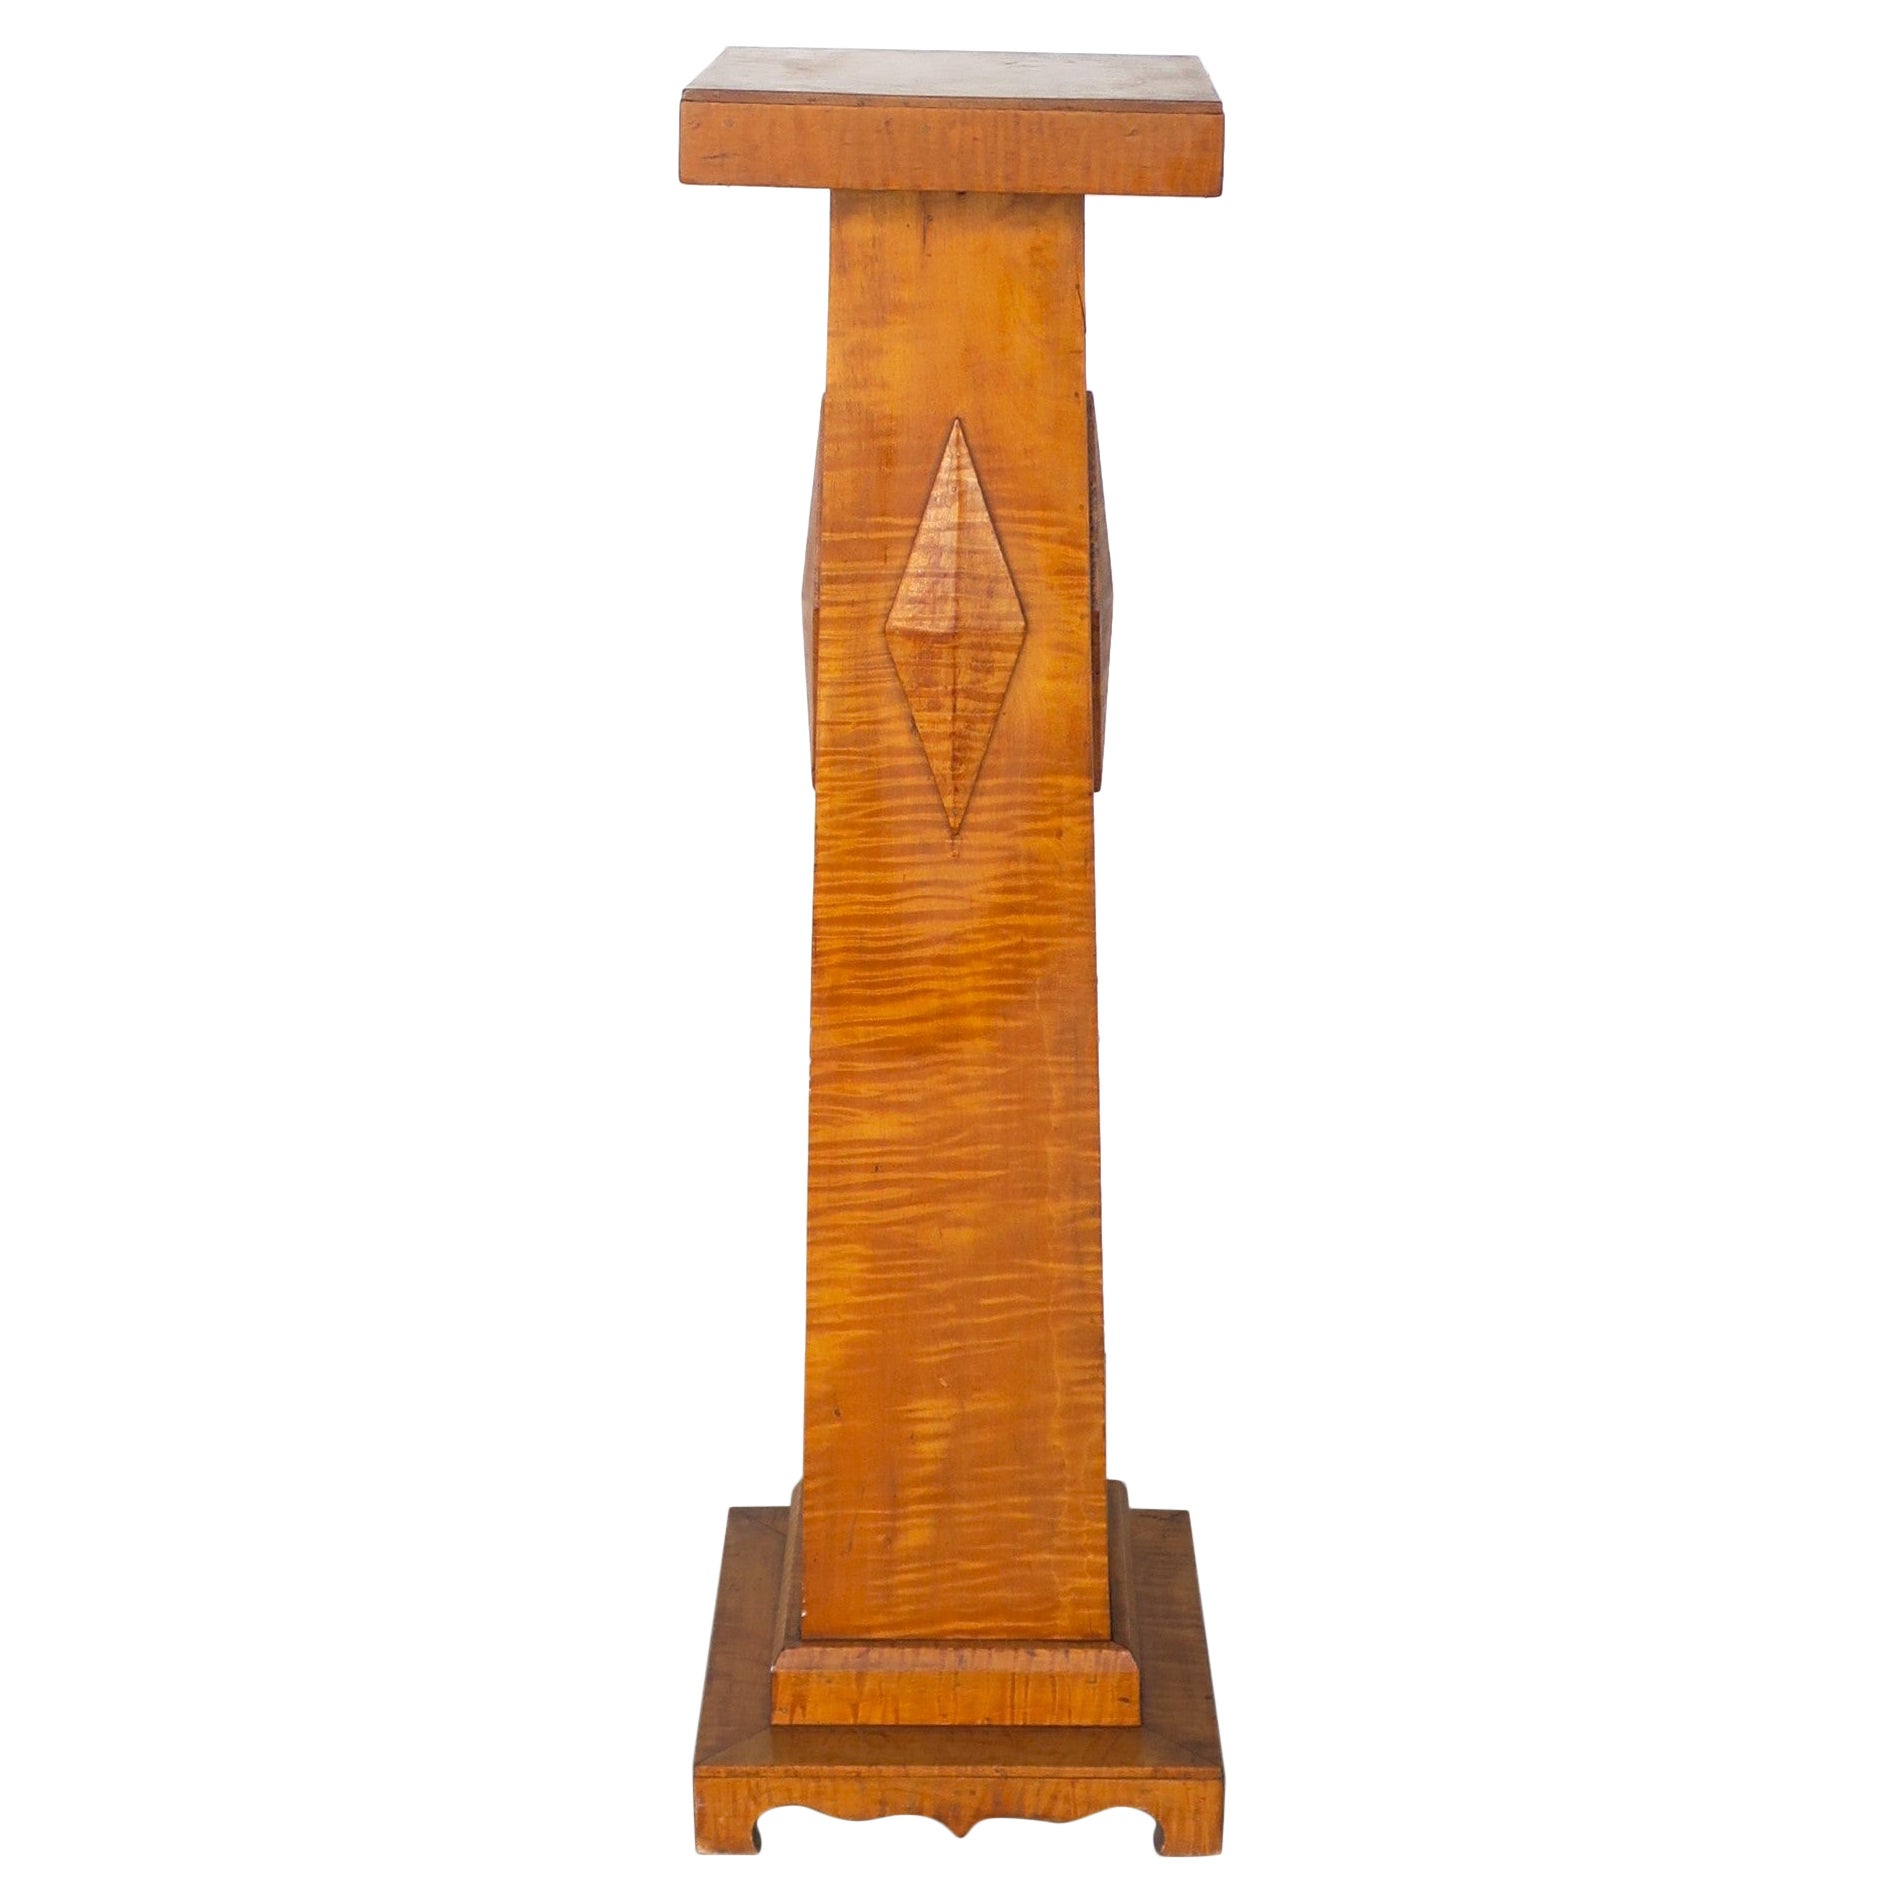 Maple Wood Column Pedestal Stand 